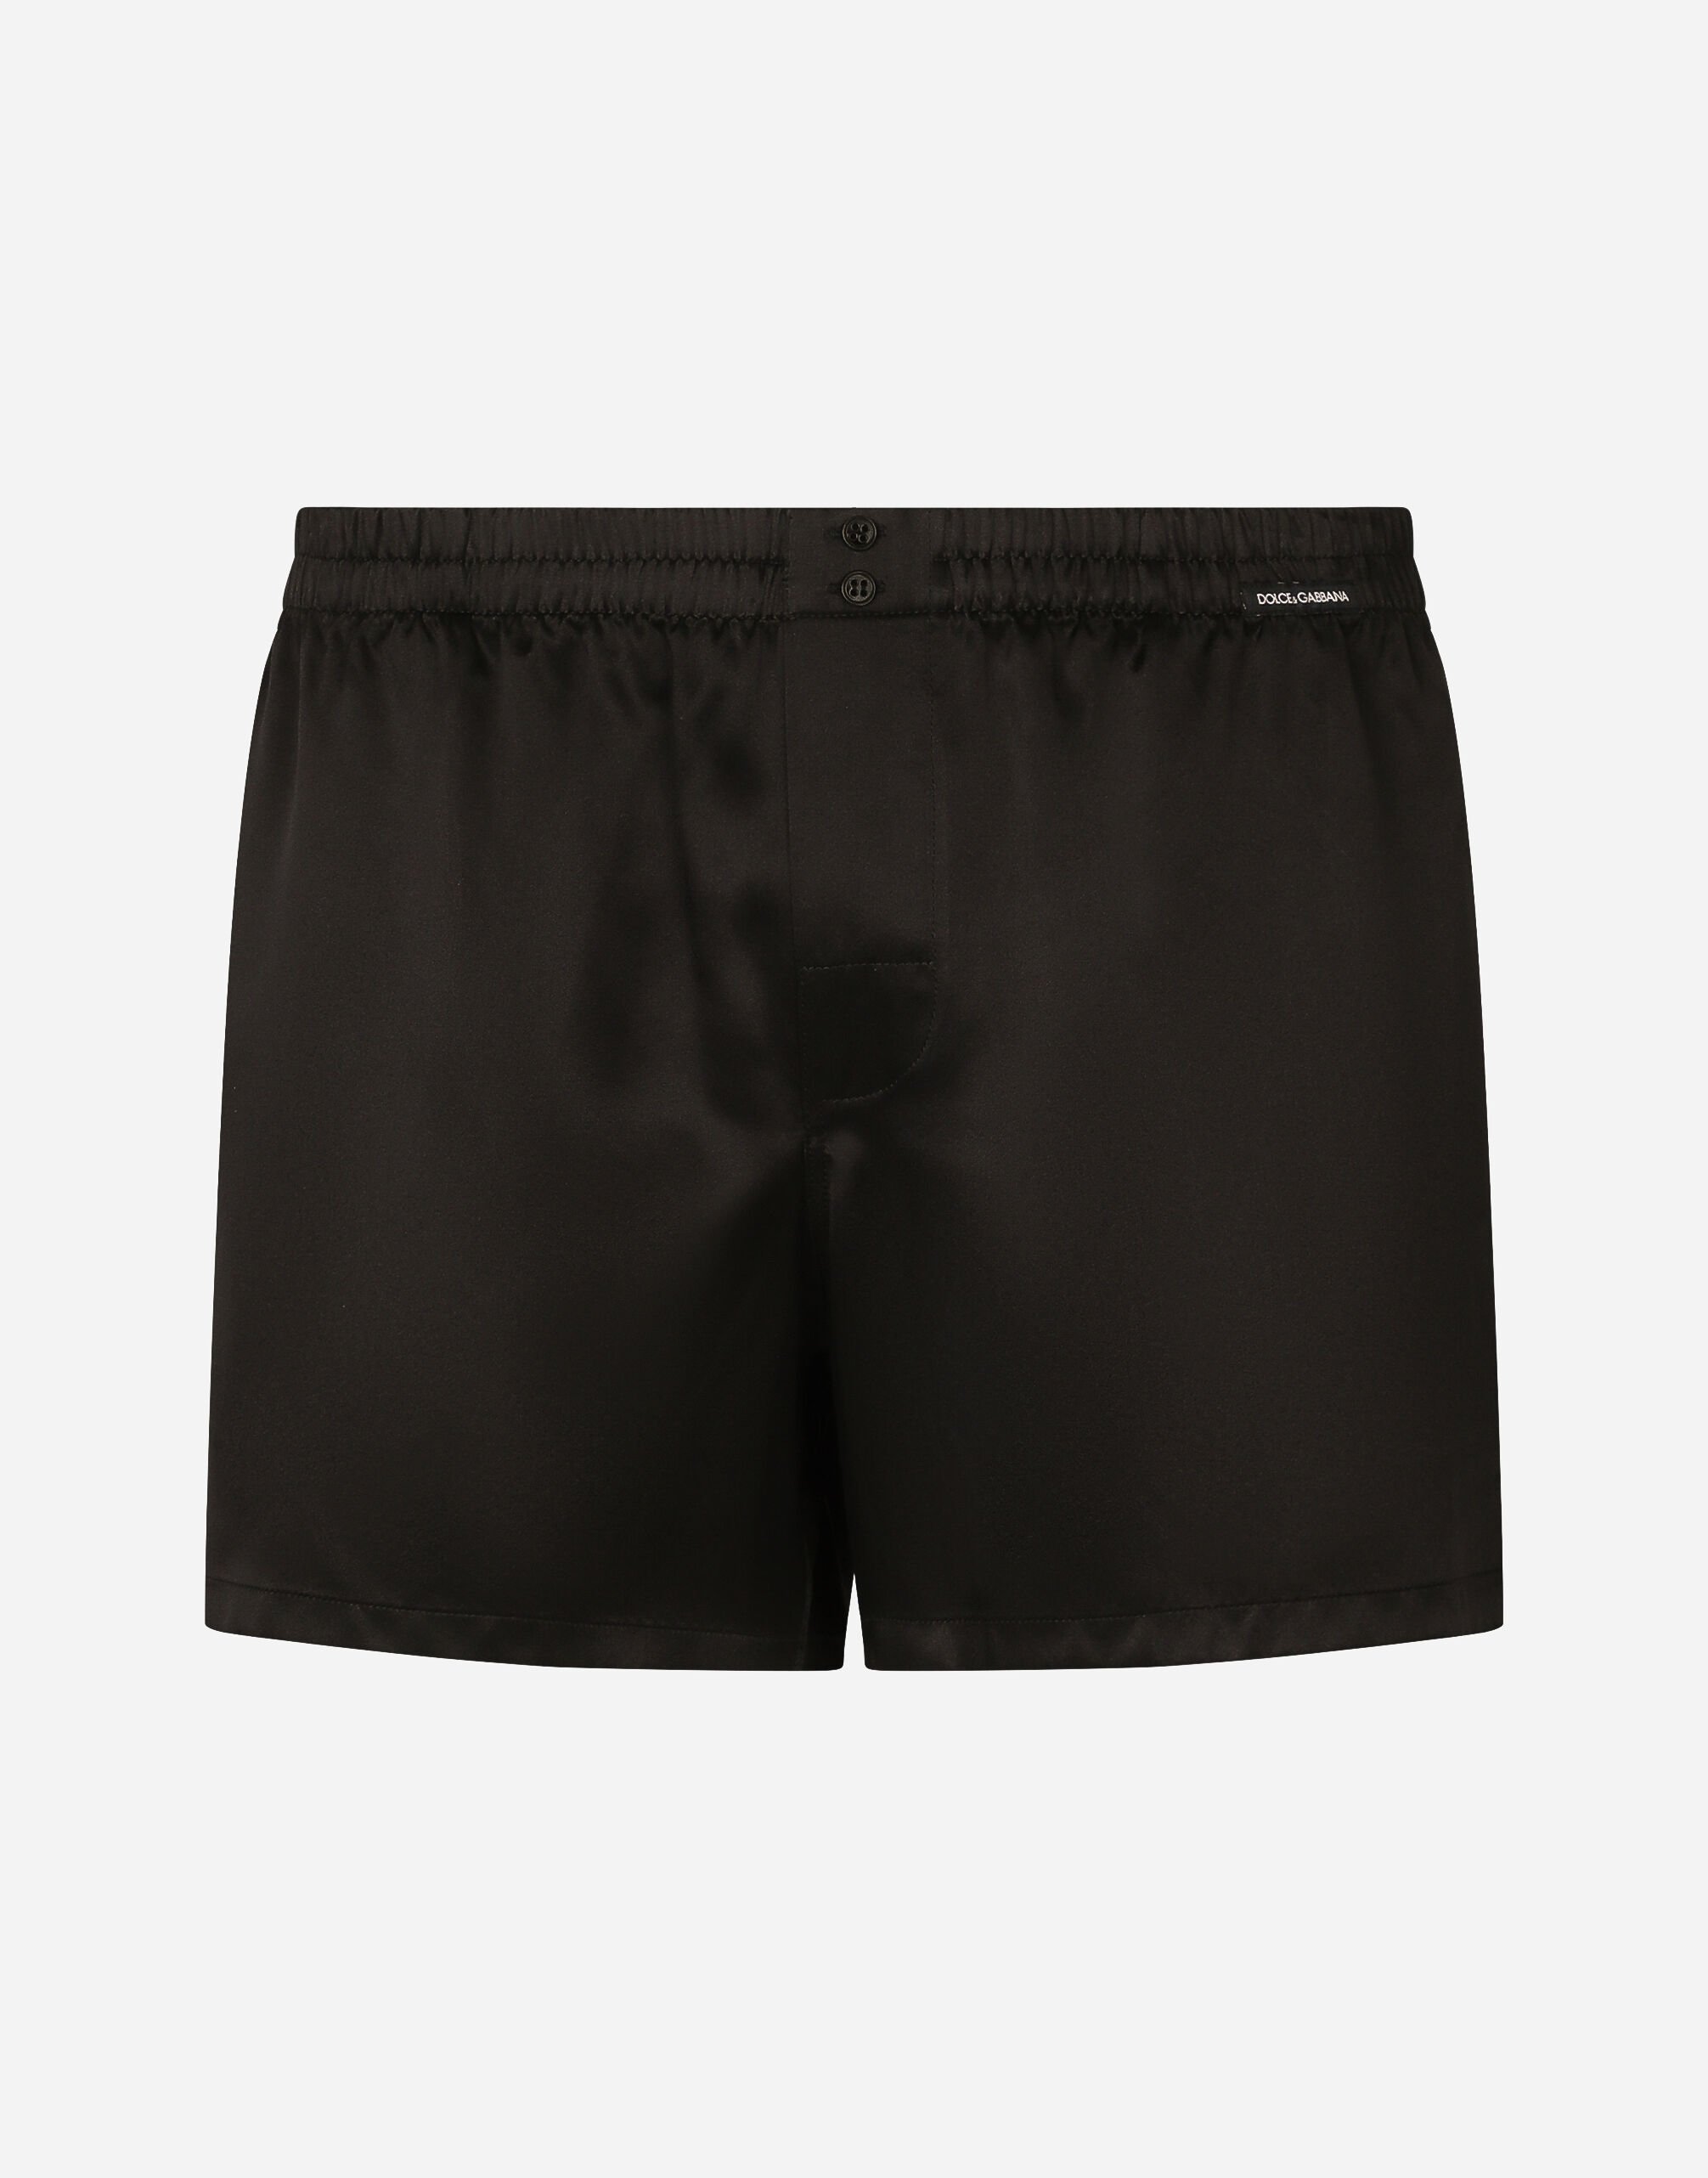 Dolce & Gabbana Shorts de seda con etiqueta con logotipo Negro M9C03JONN95